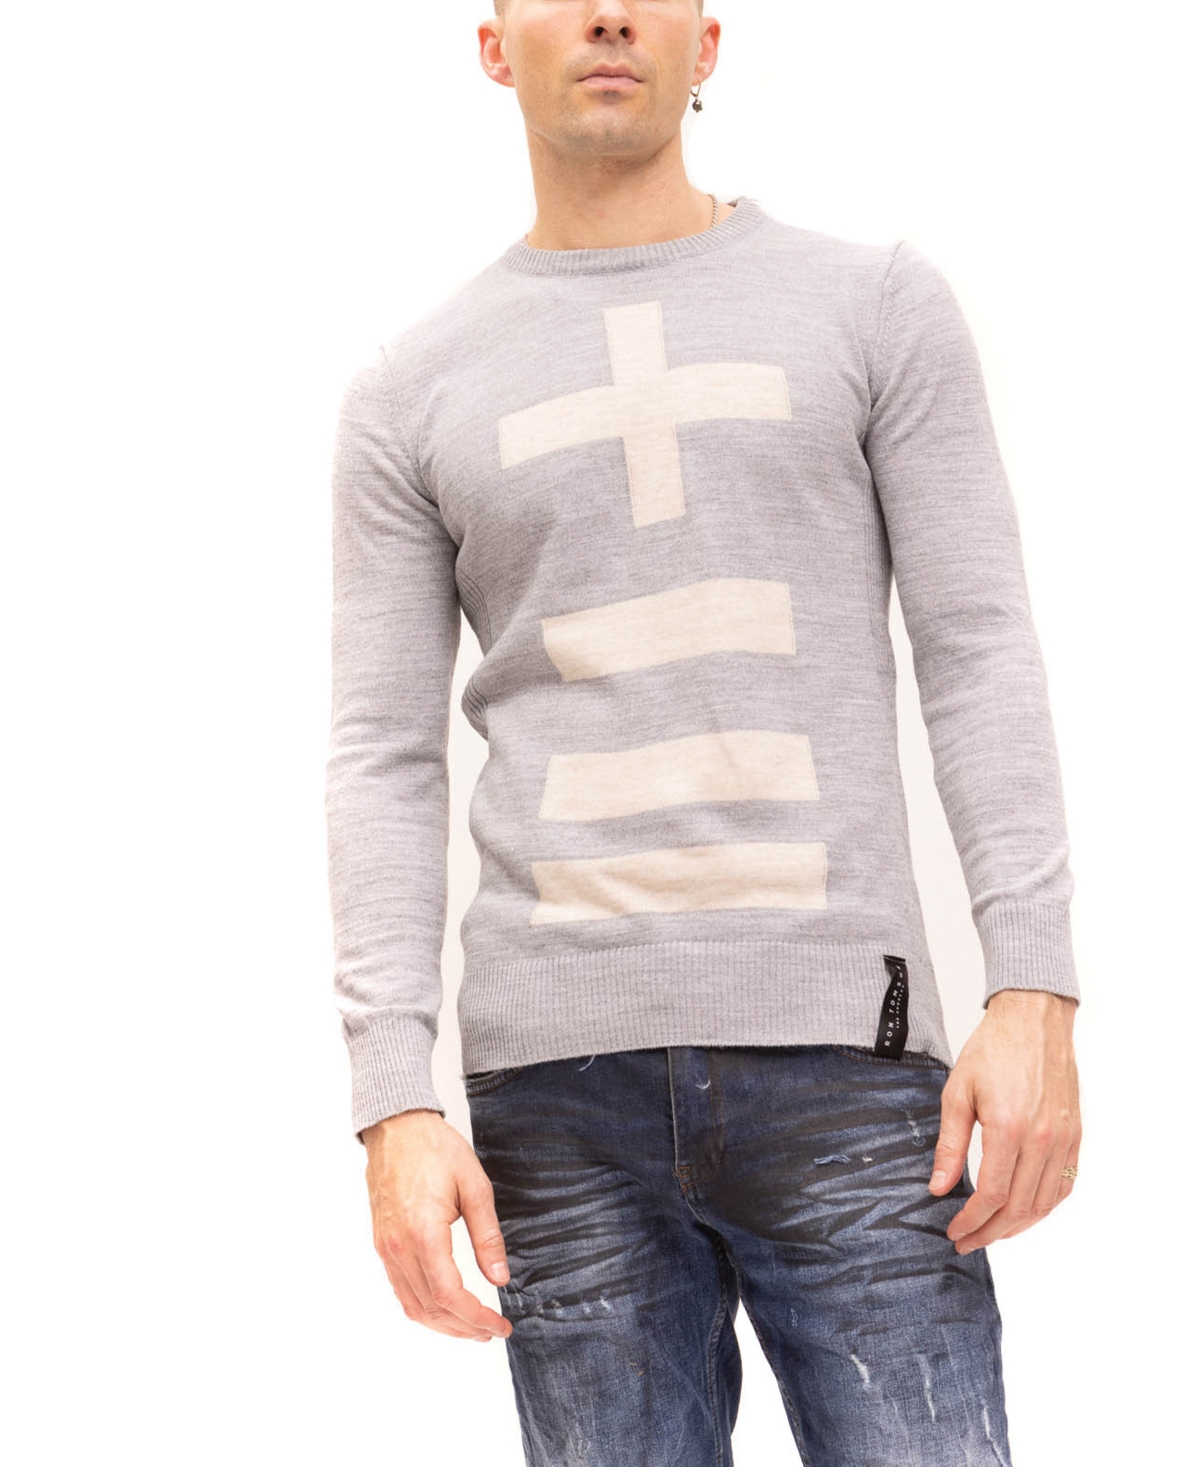 Men's Modern Signs Sweater - Gray